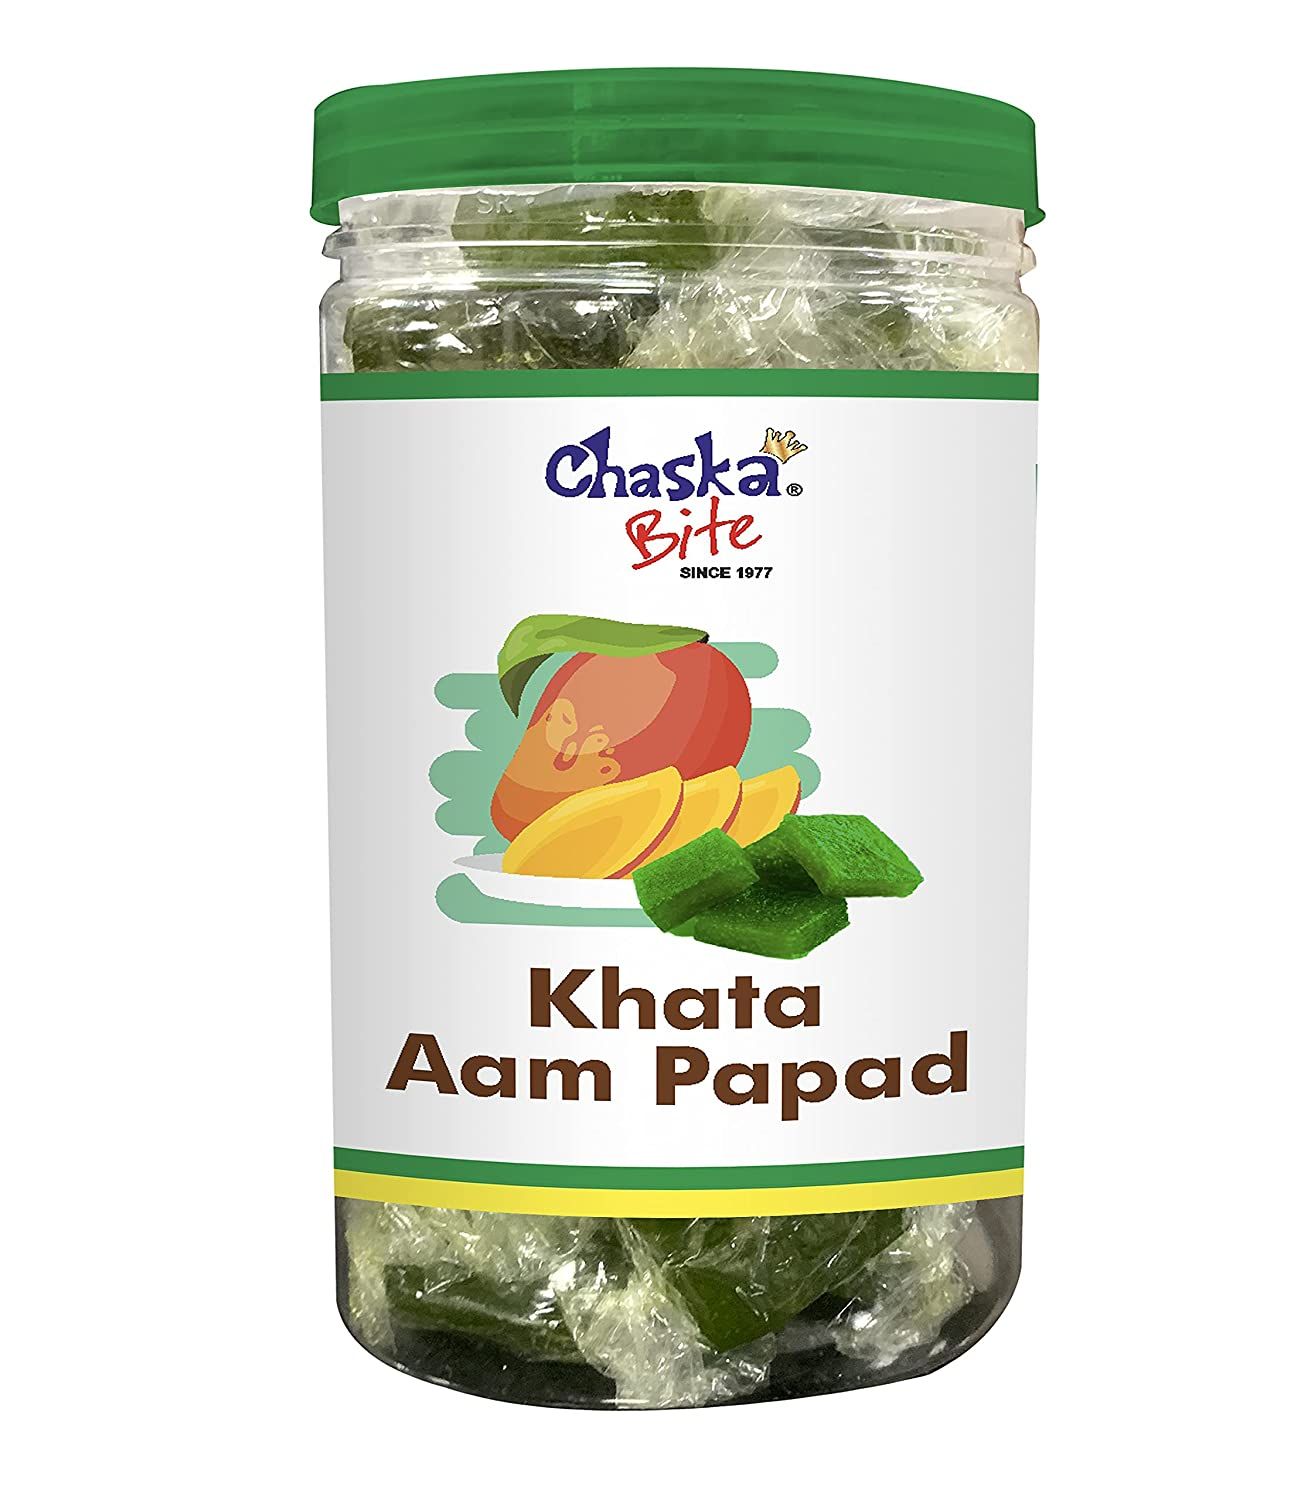 Chaska Bite Aam Papad Khatta Image